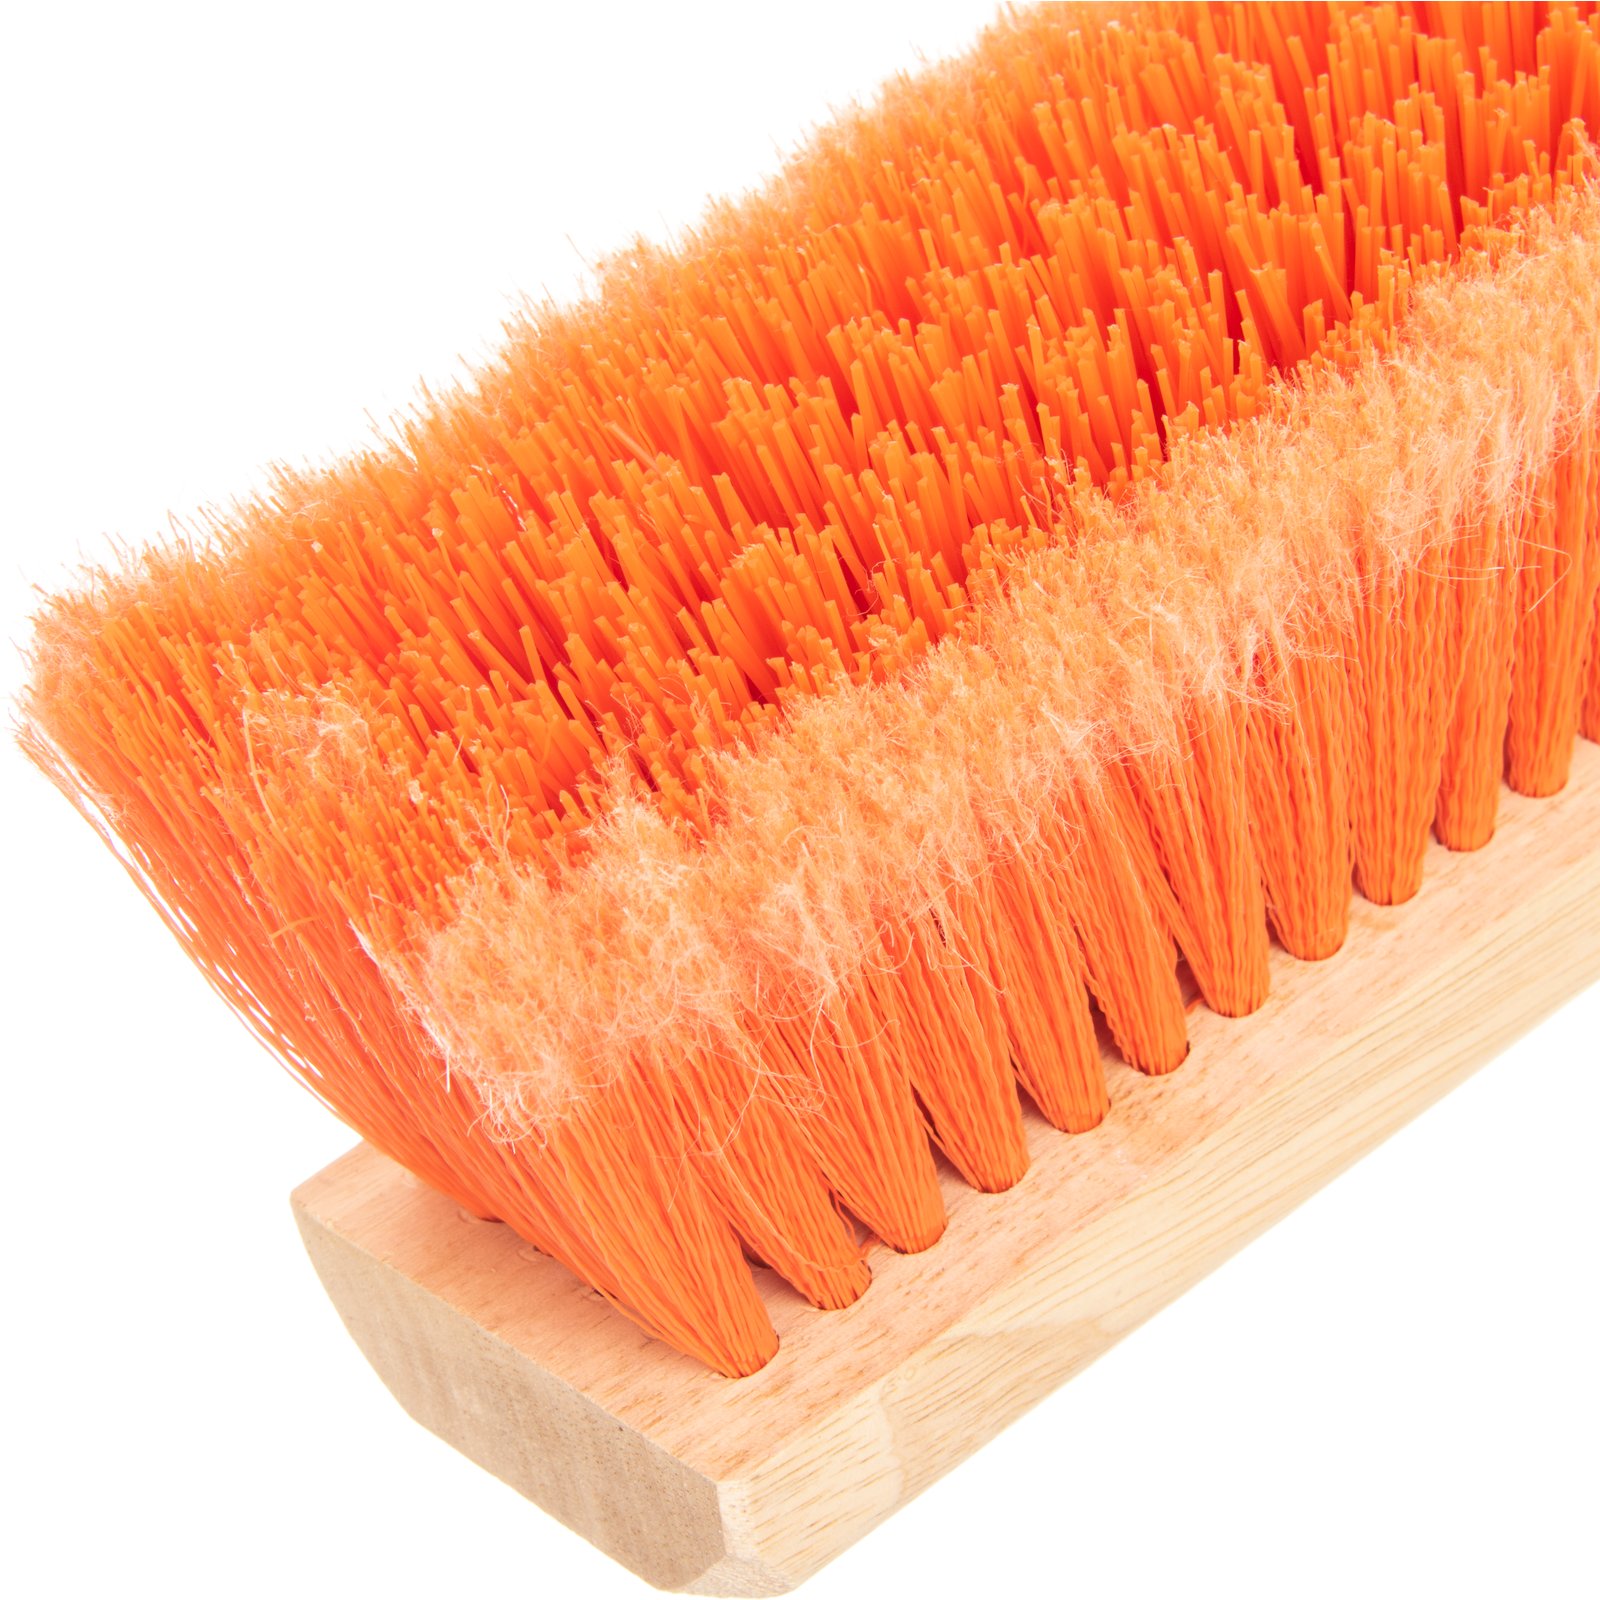 Peak Straws Incl Cleaning Brush, 4-Pack - Orrefors @ RoyalDesign